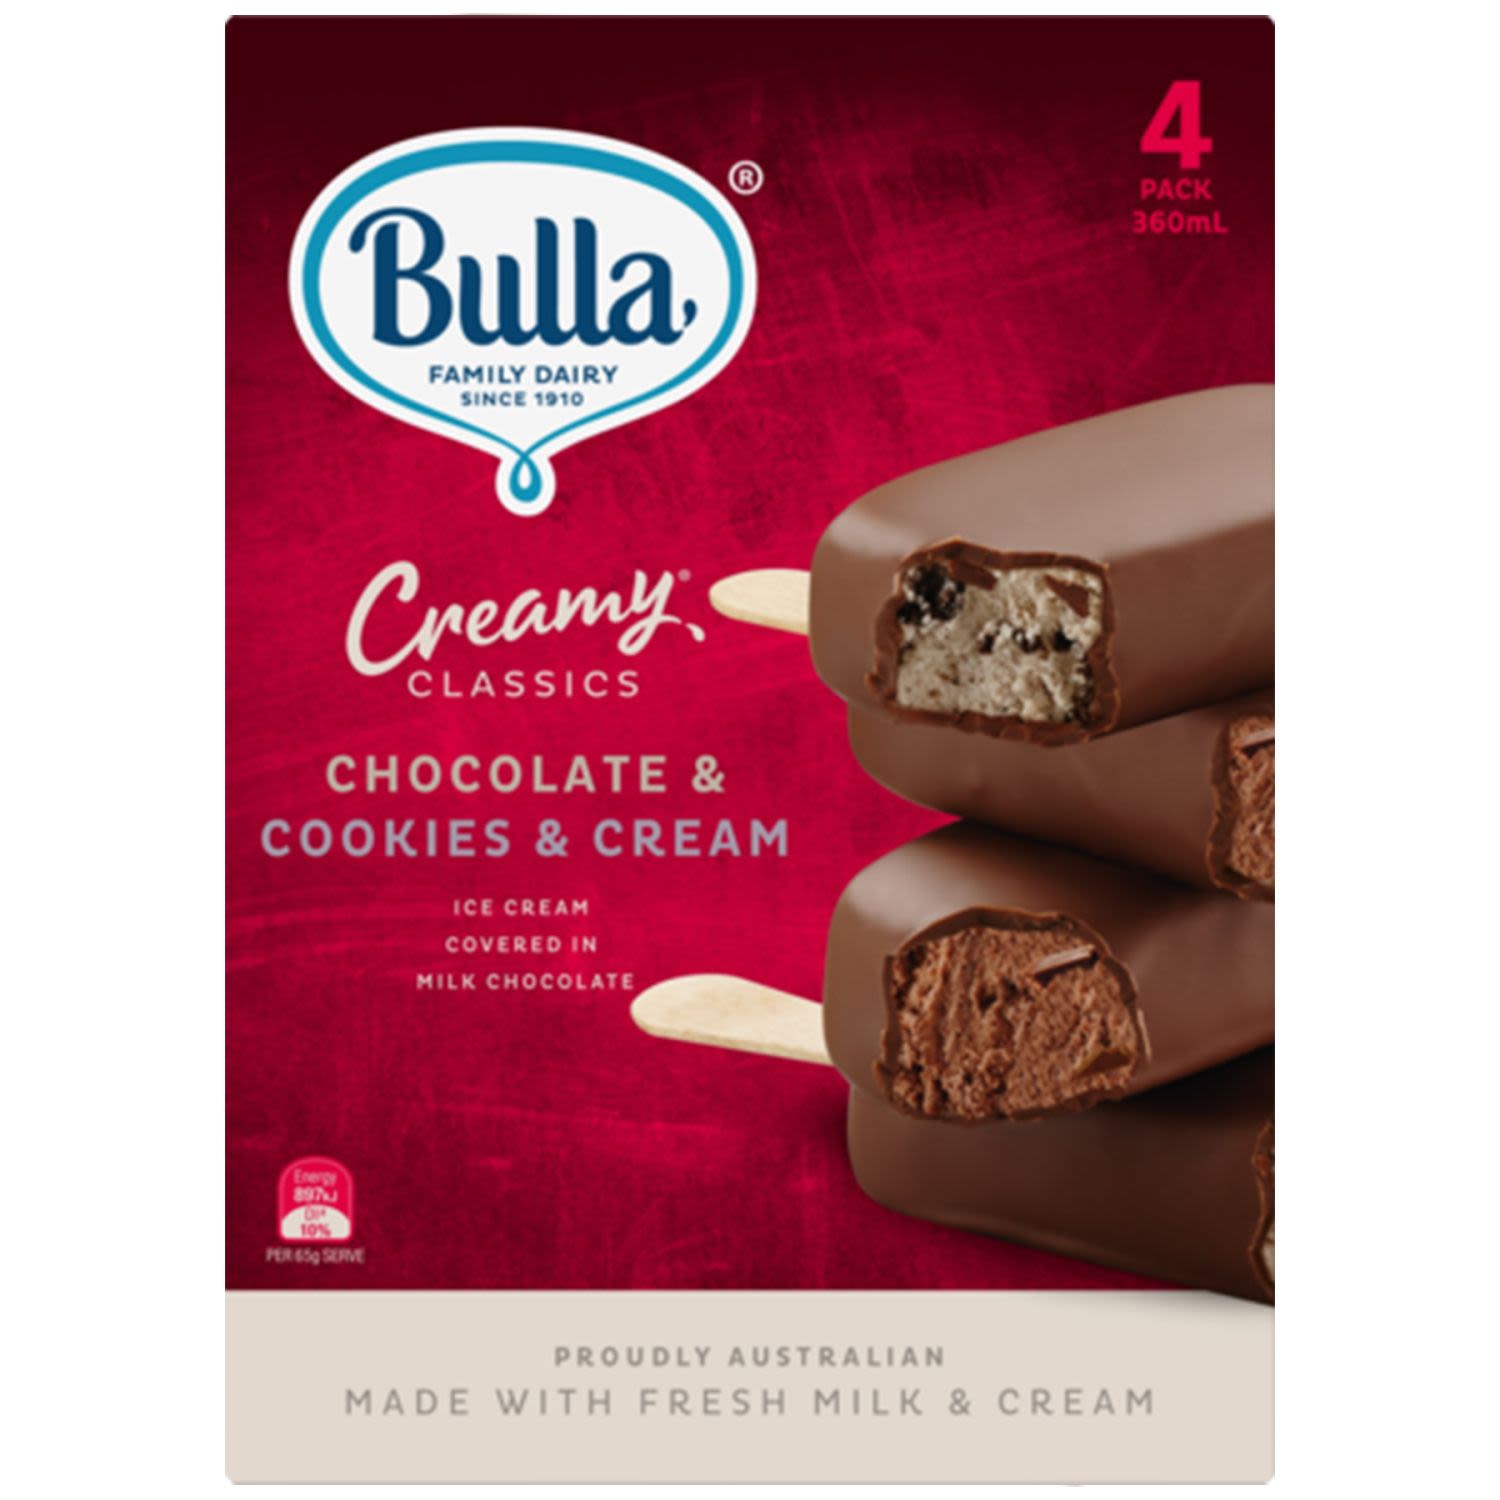 Bulla Creamy Classics Chocolate  Cookies  Cream IGA Shop Online